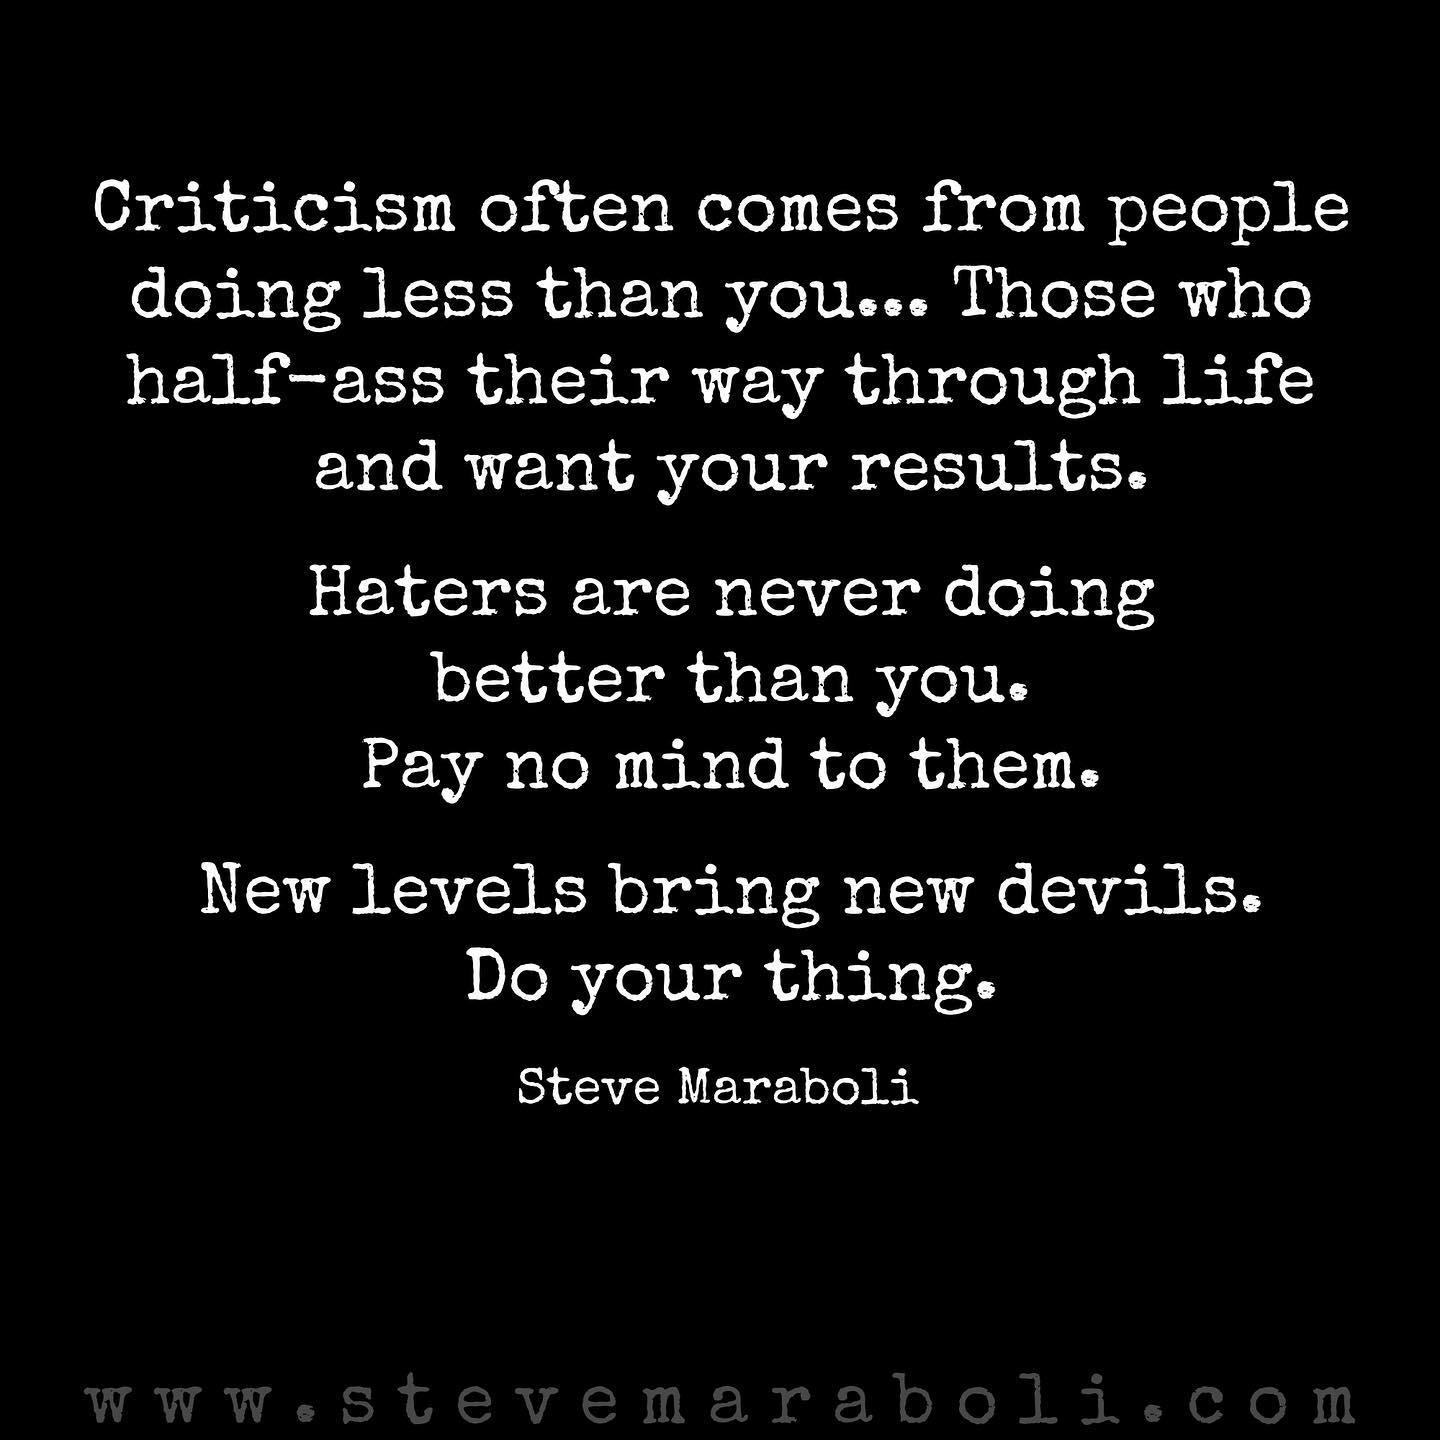 New levels bring new devils…